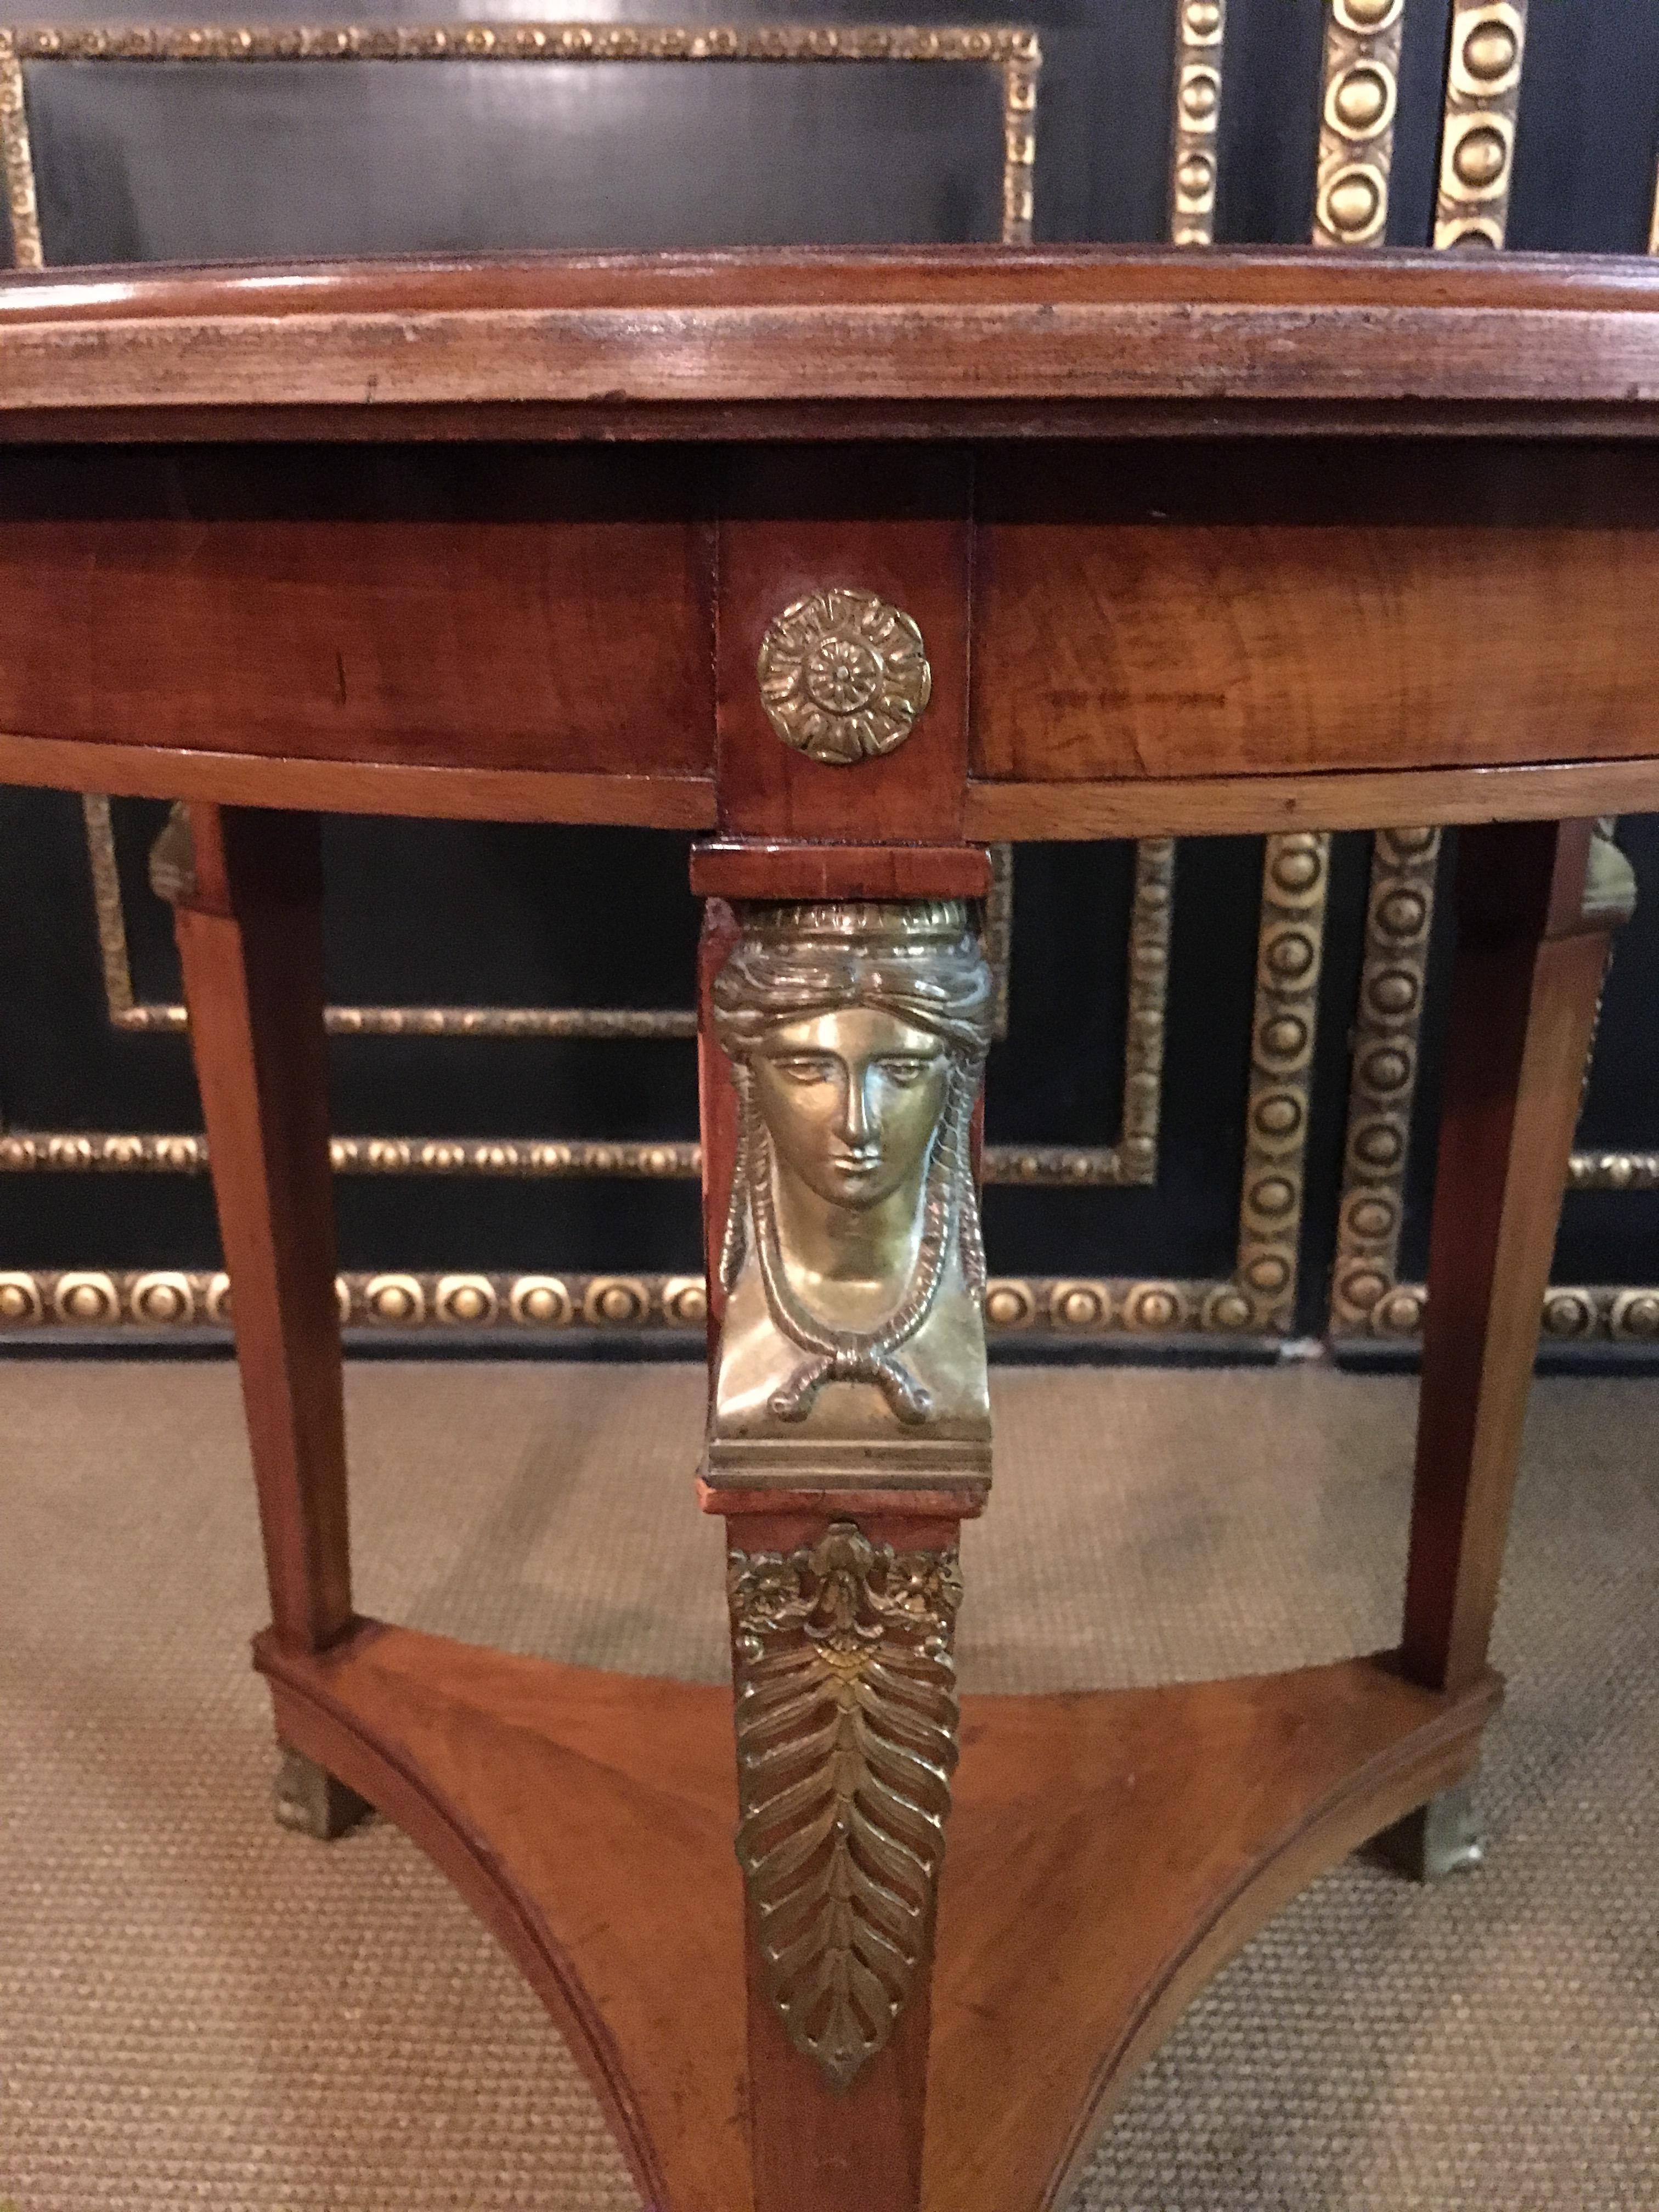 Bronzed Original antique Empire Table circa 1860 - 1880 Mahogany veneer bronzed  For Sale